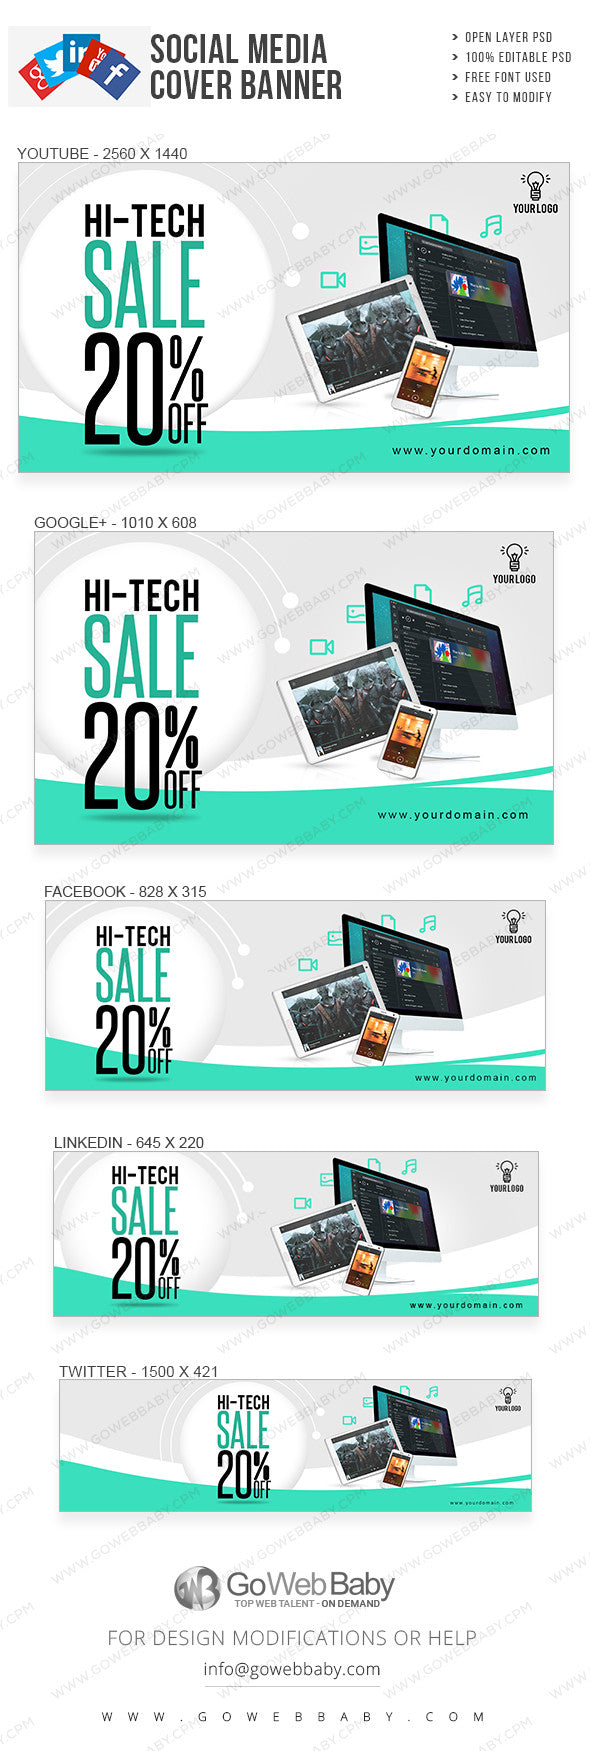 Hi-tech sale social media-covers Banner for website marketing - GoWebBaby.Com